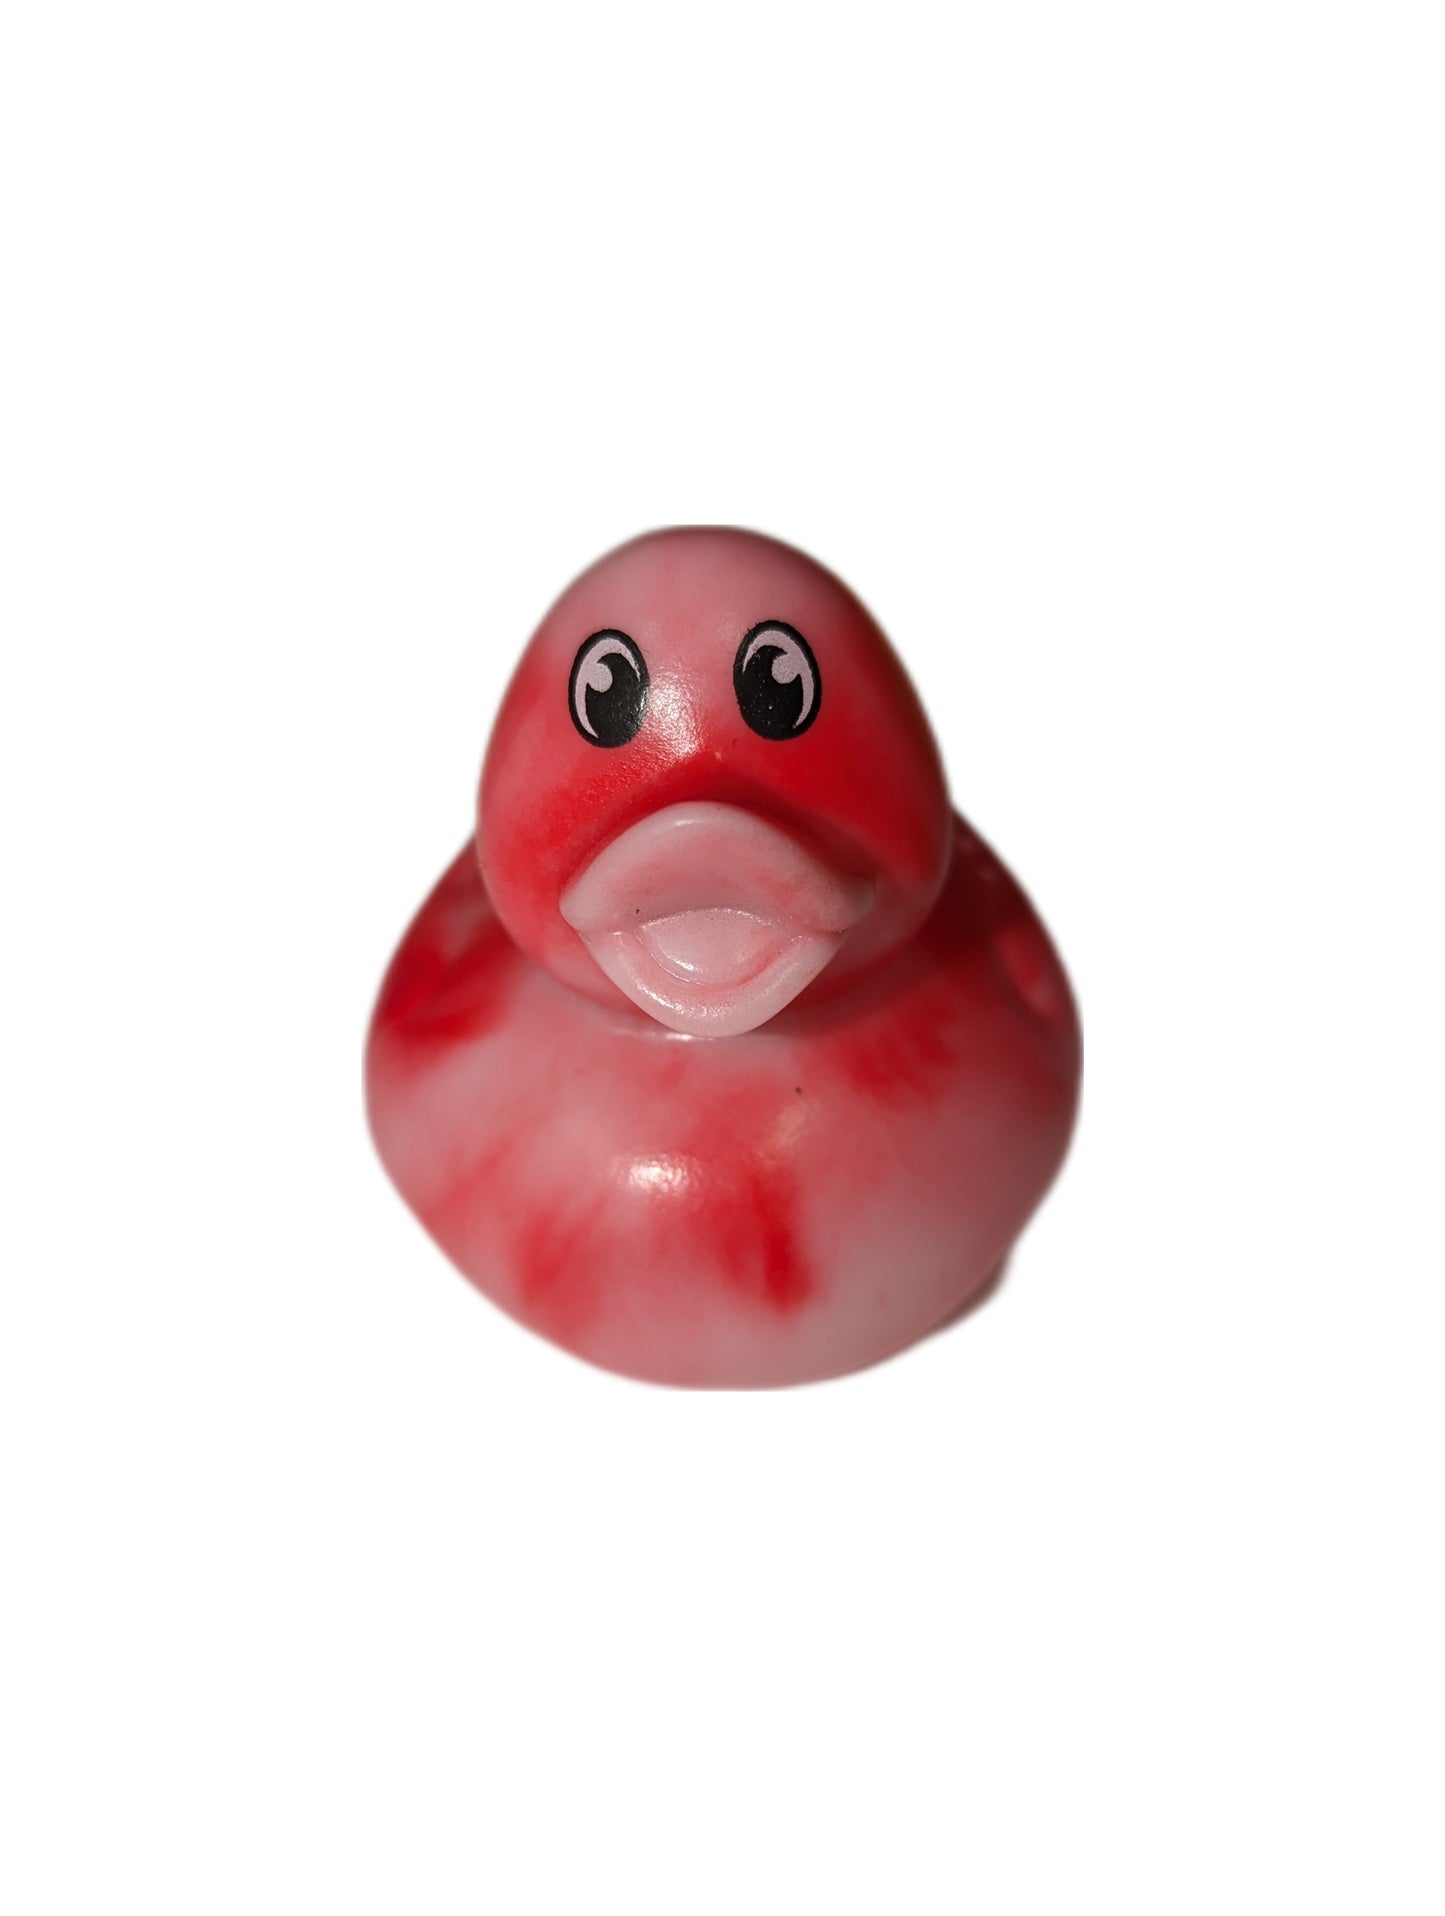 10 Marbled Red Ducks - 2" Rubber Ducks